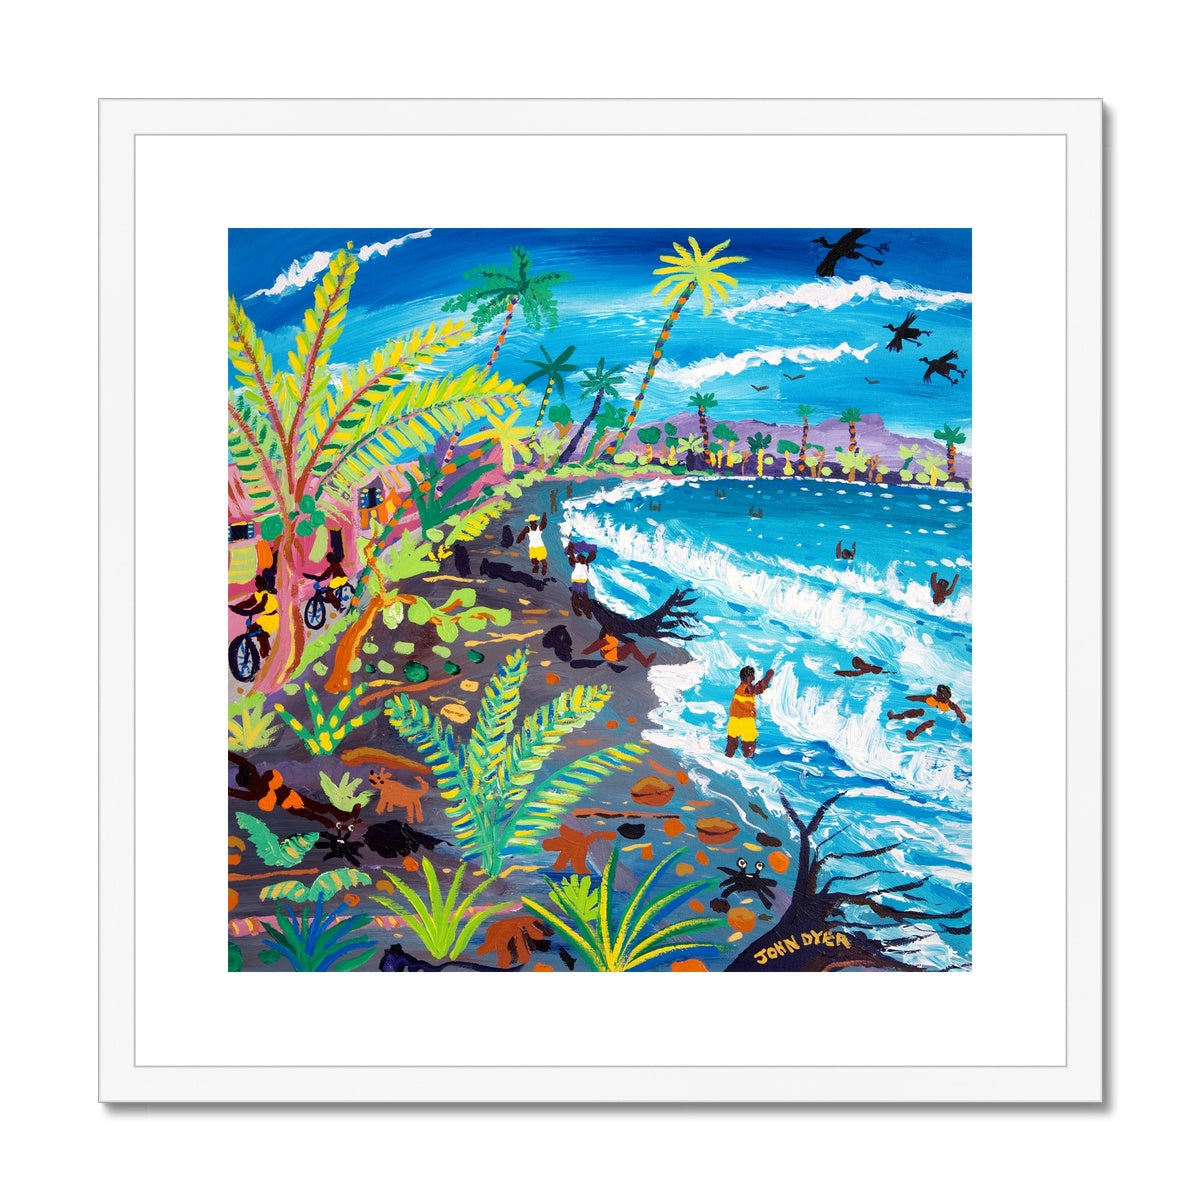 John Dyer Framed Open Edition Cornish Art Print. 'Caribbean Beach Life, Costa Rica'. Caribbean Art Gallery